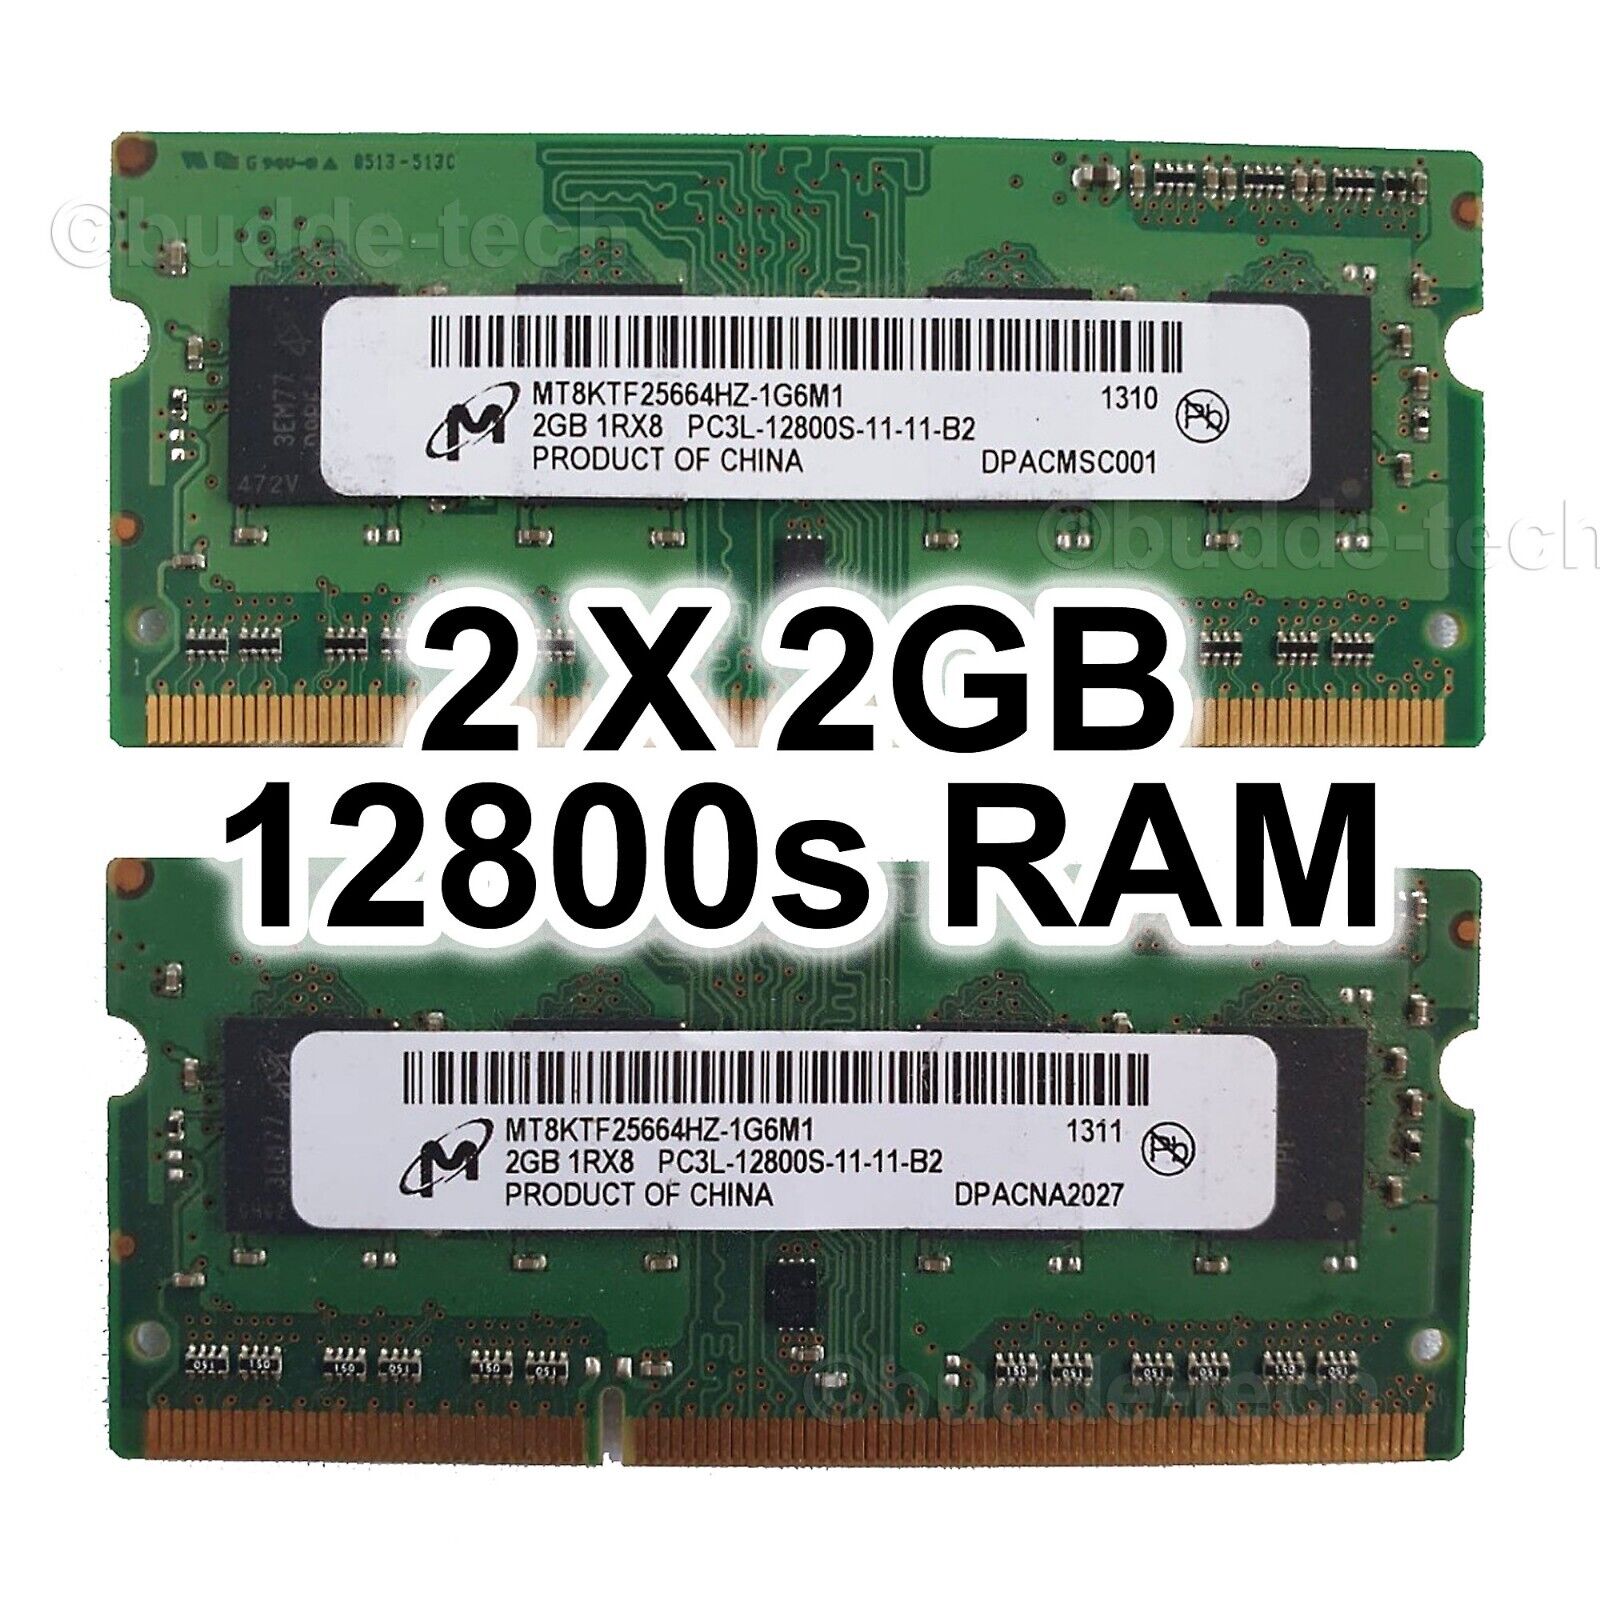 4GB RAM KIT (2 X 2GB RAM Sticks) - DDR3 12800s Laptop RAM/Memory Tested Working